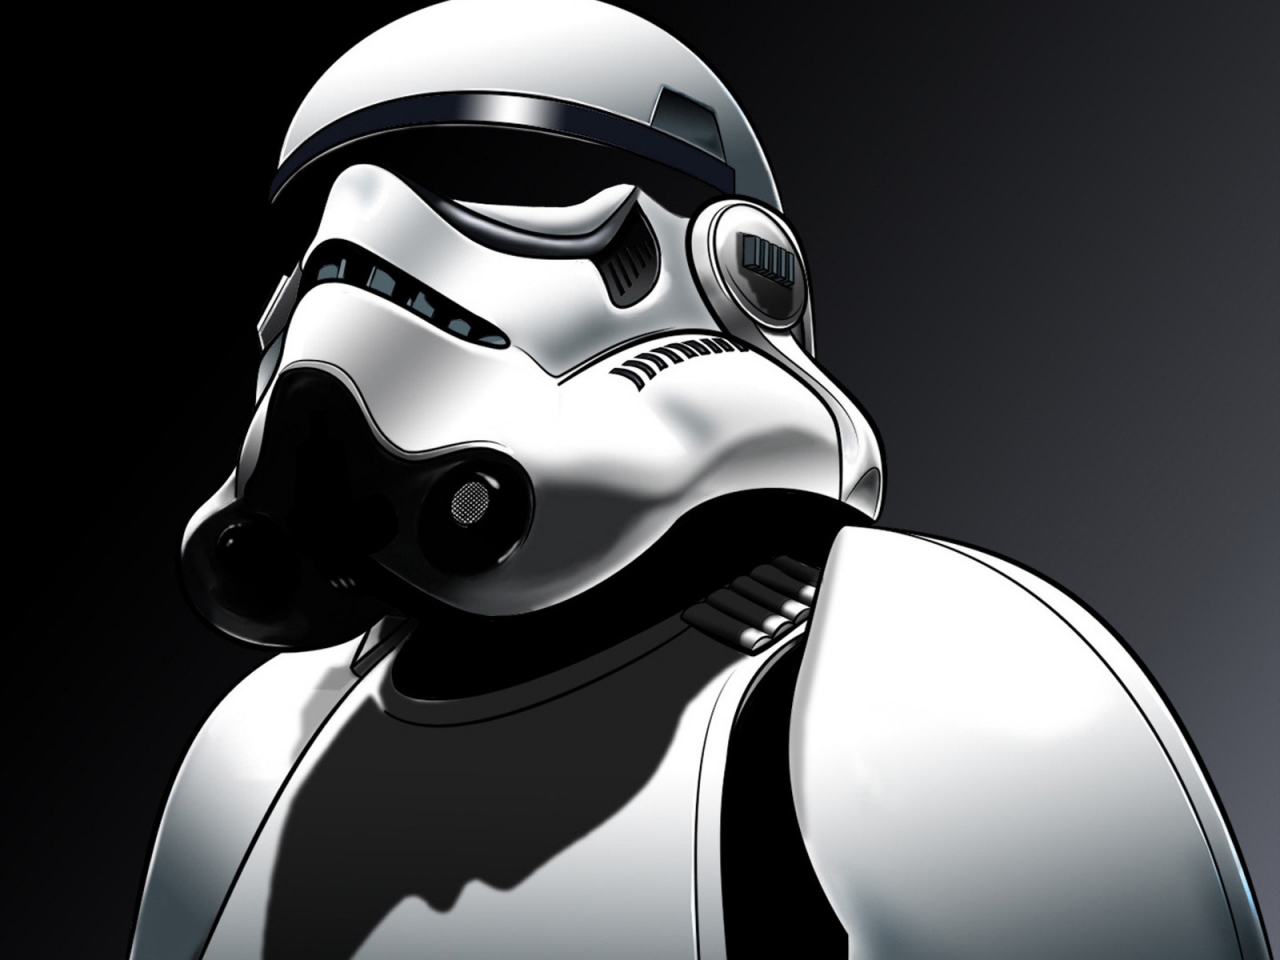 Star Wars Soldier for 1280 x 960 resolution